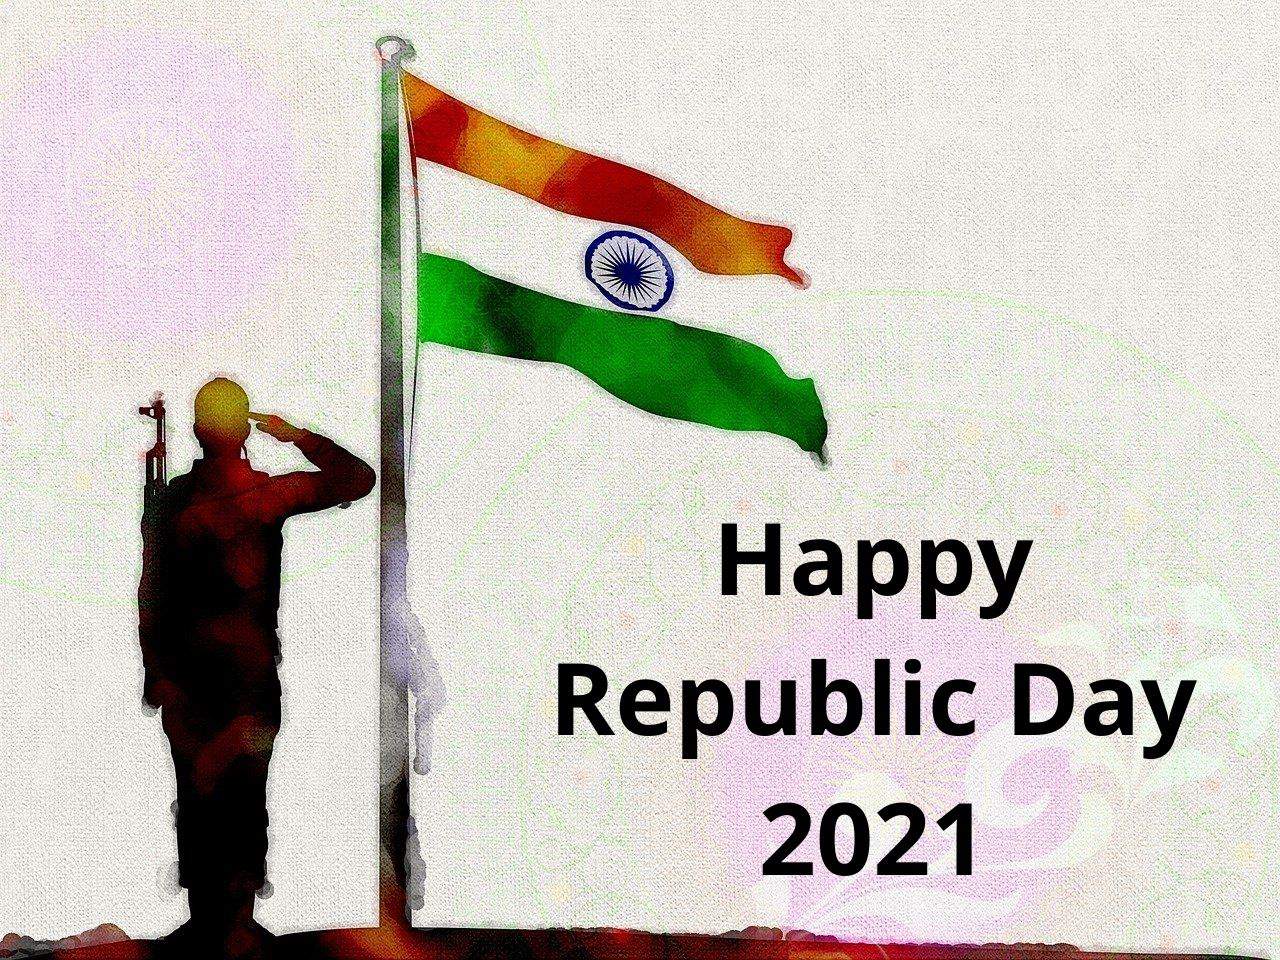 Happy Republic Day 2021 wishes